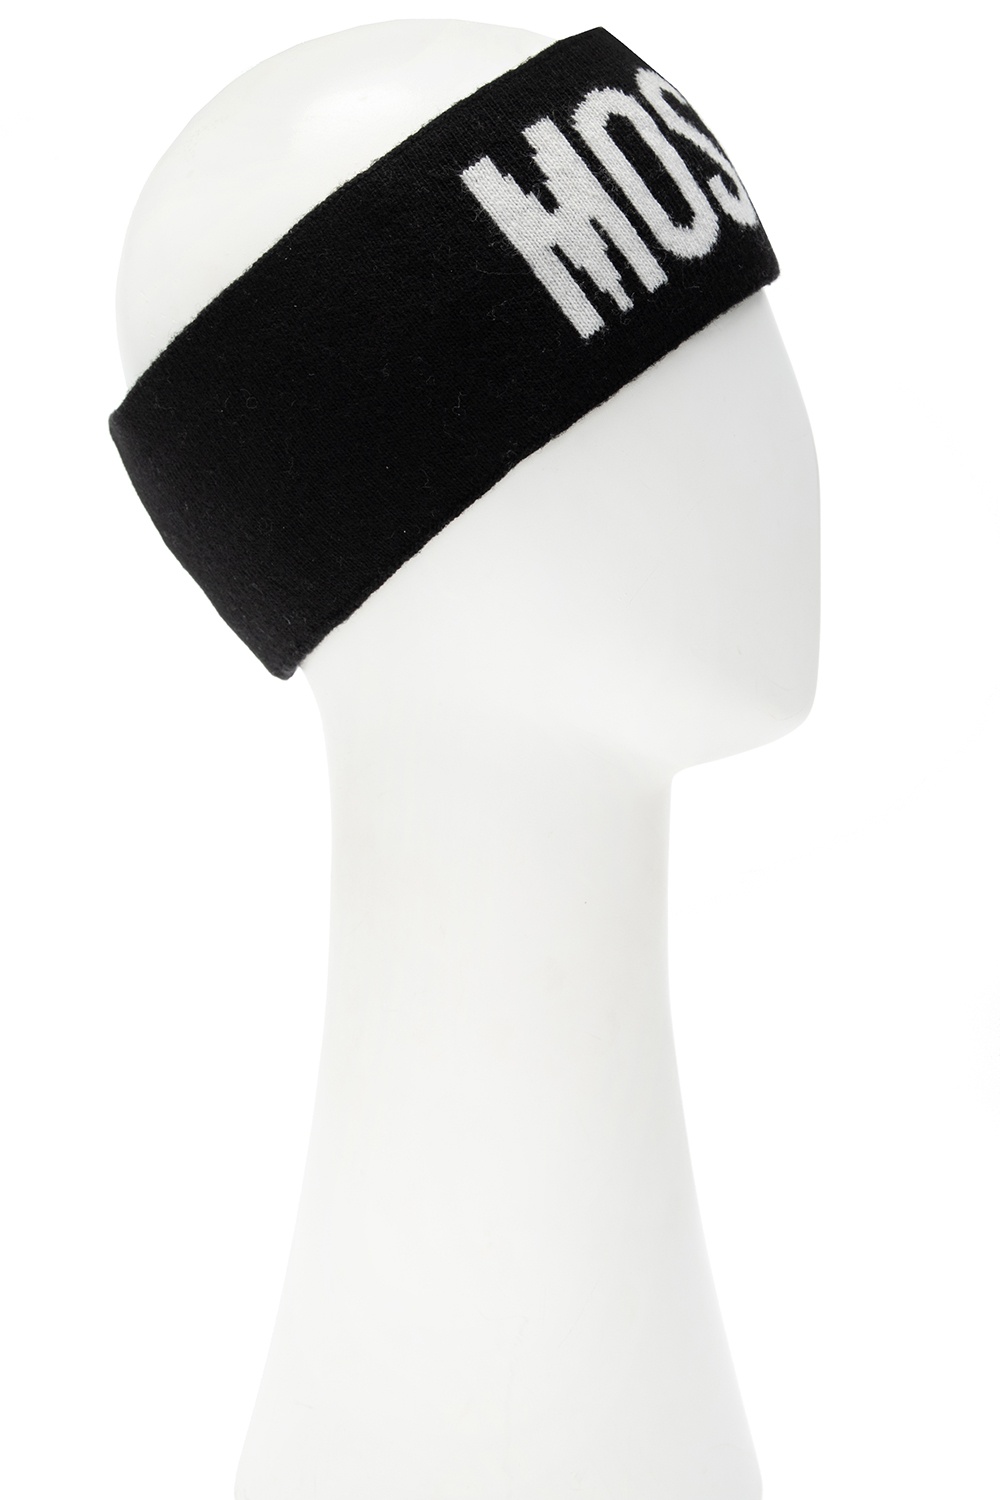 Logo headband Moschino - Vitkac US